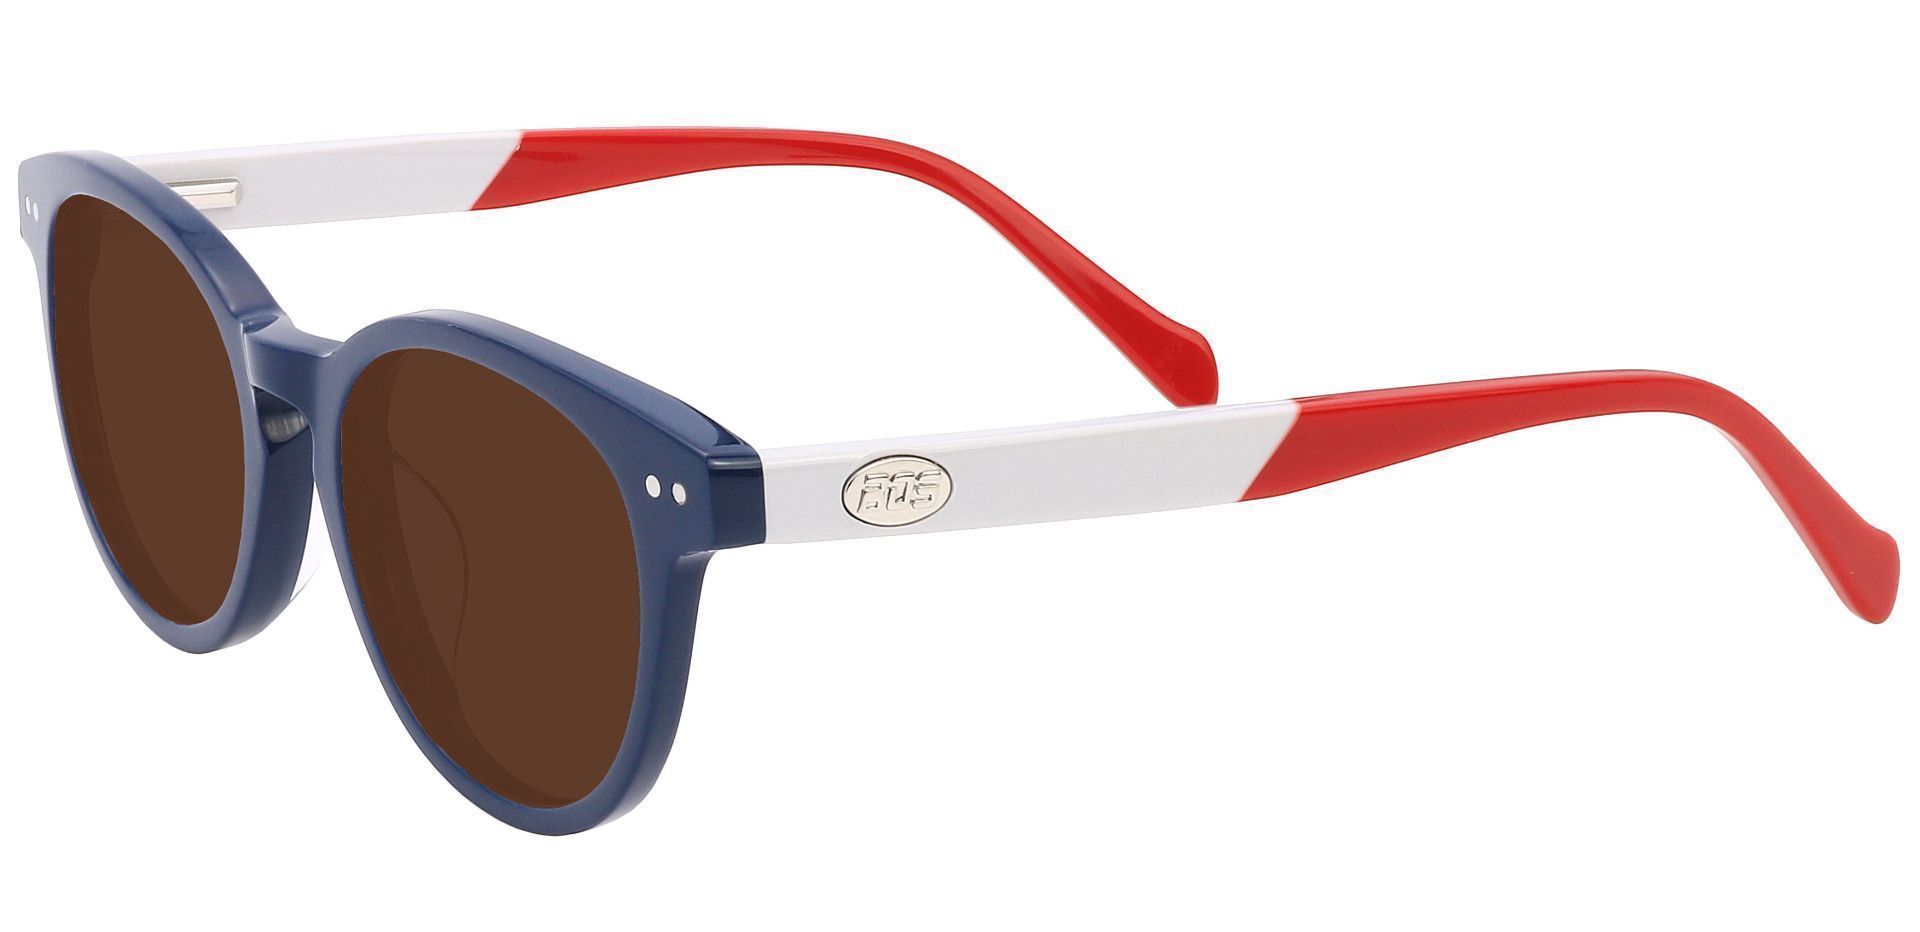 Revere Oval Reading Sunglasses - Blue Frame With Brown Lenses